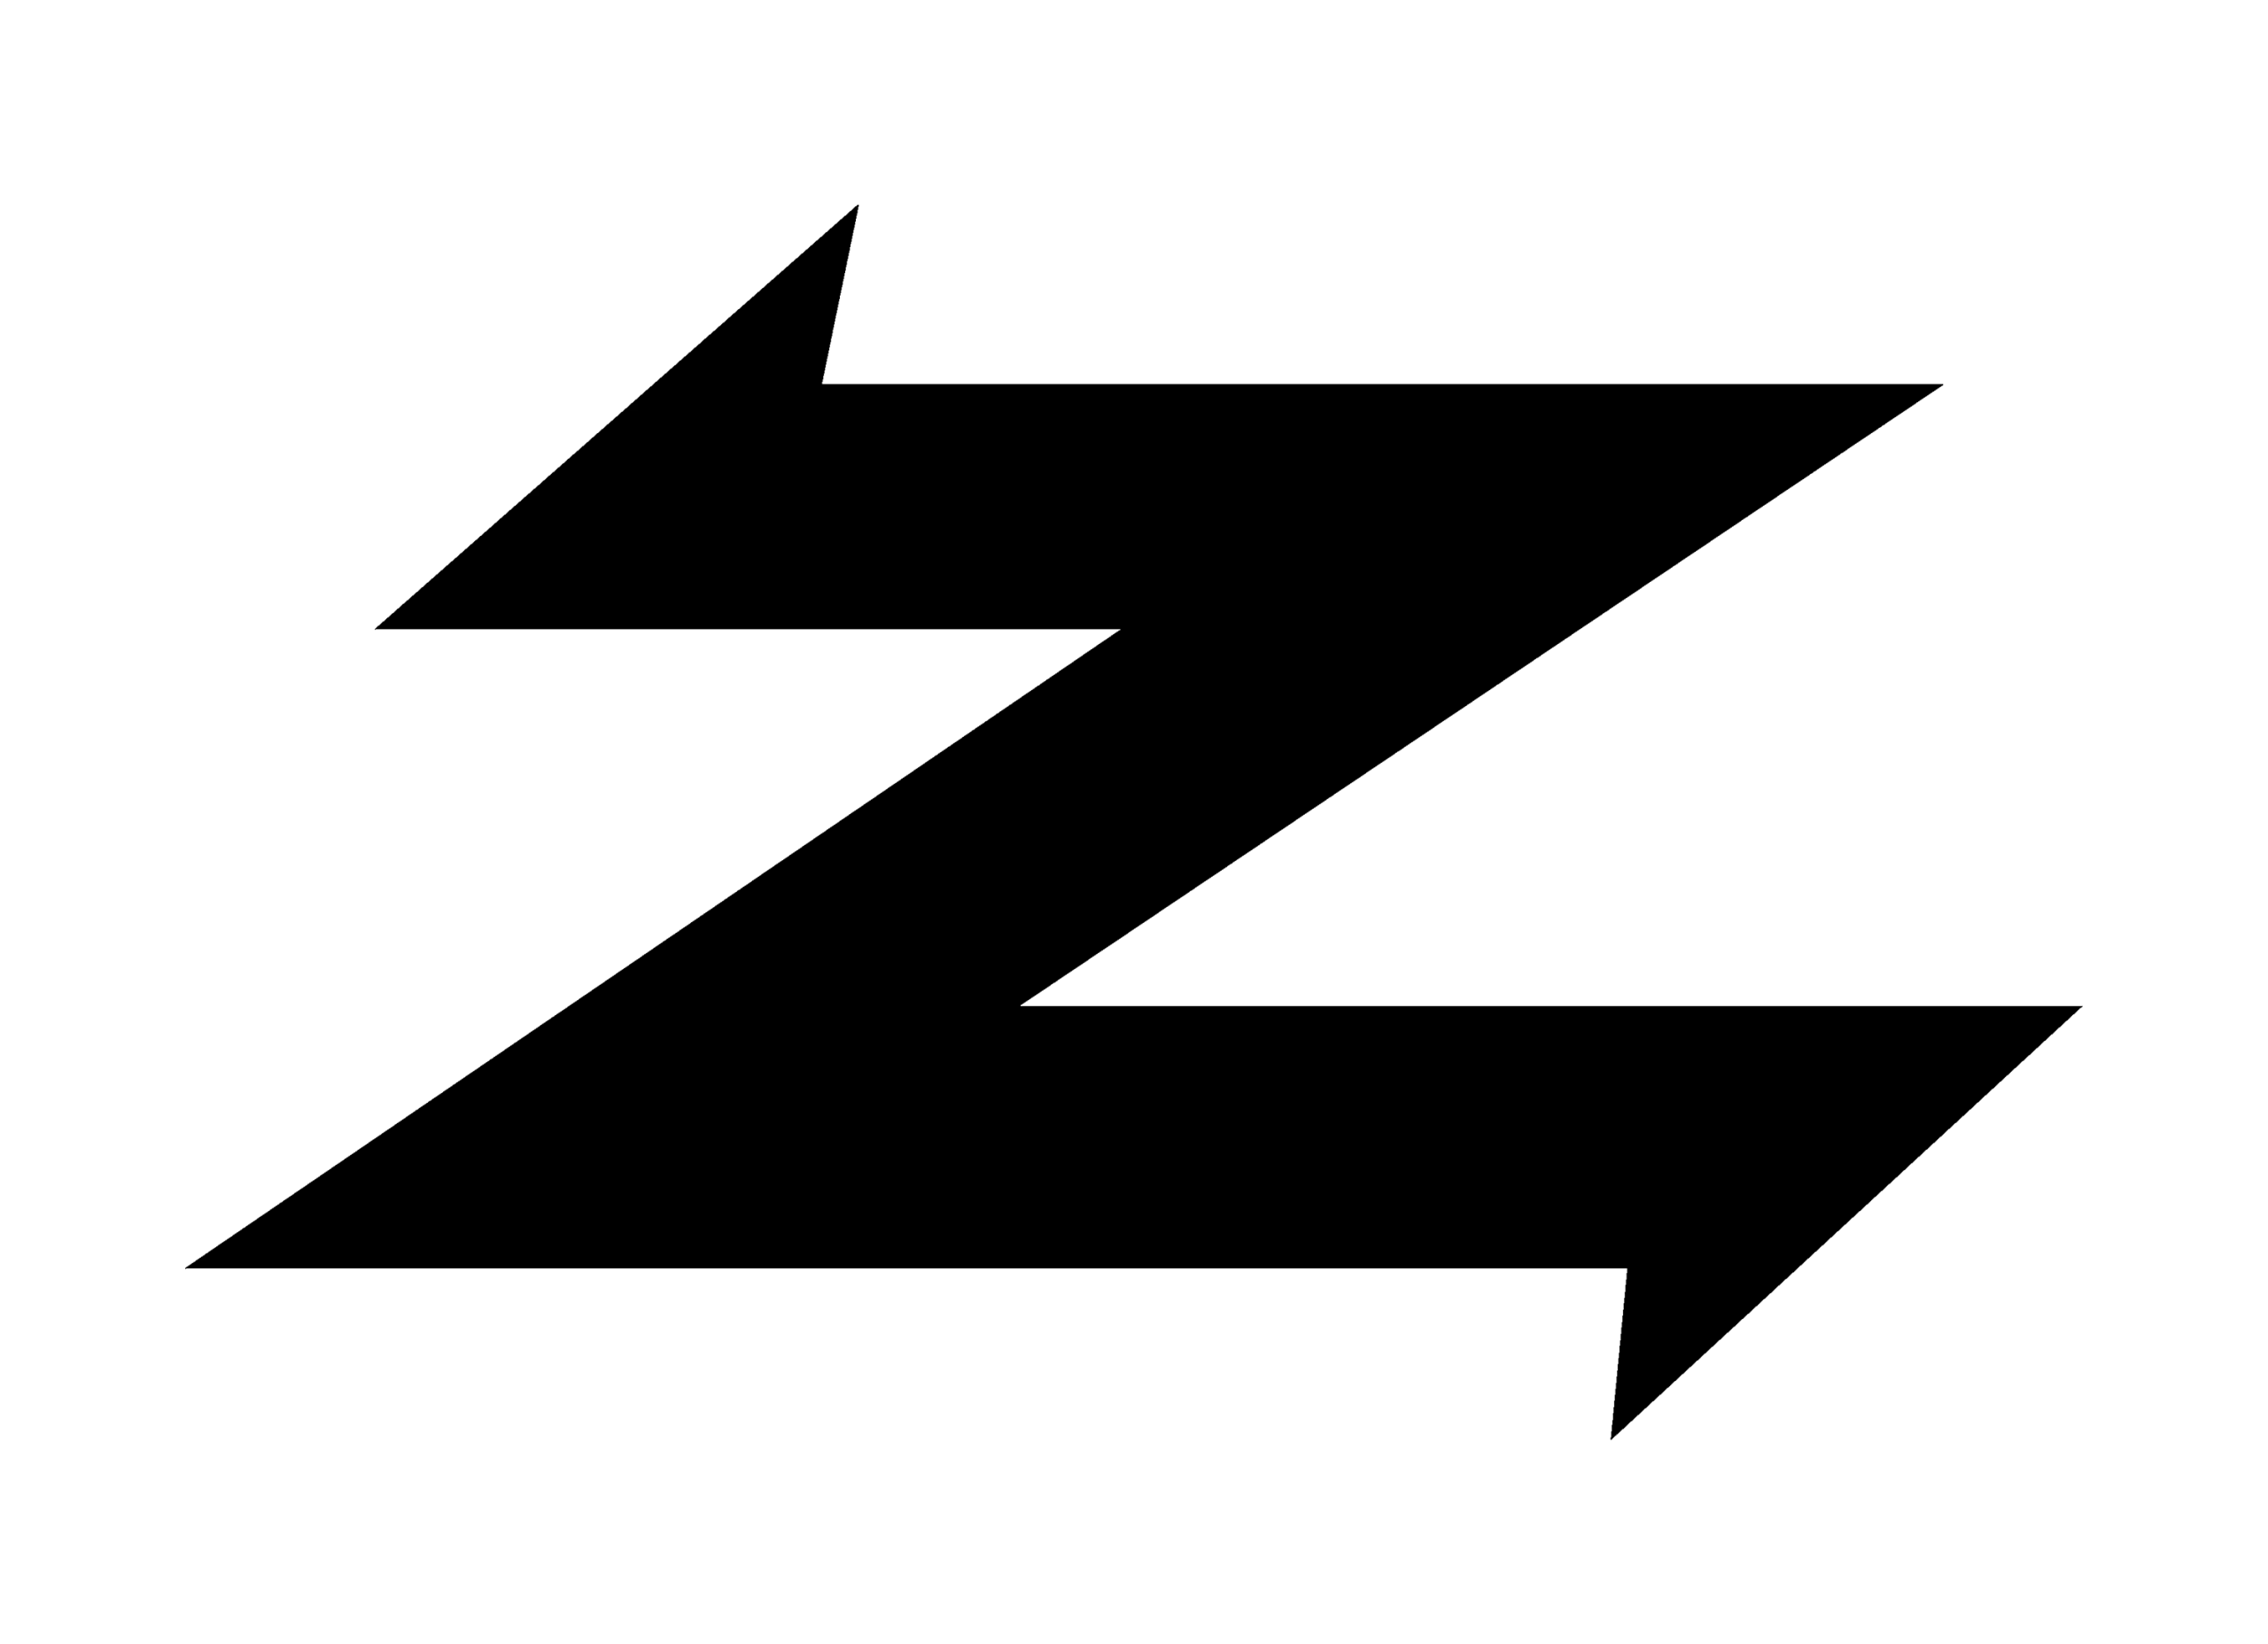 Zagato logo